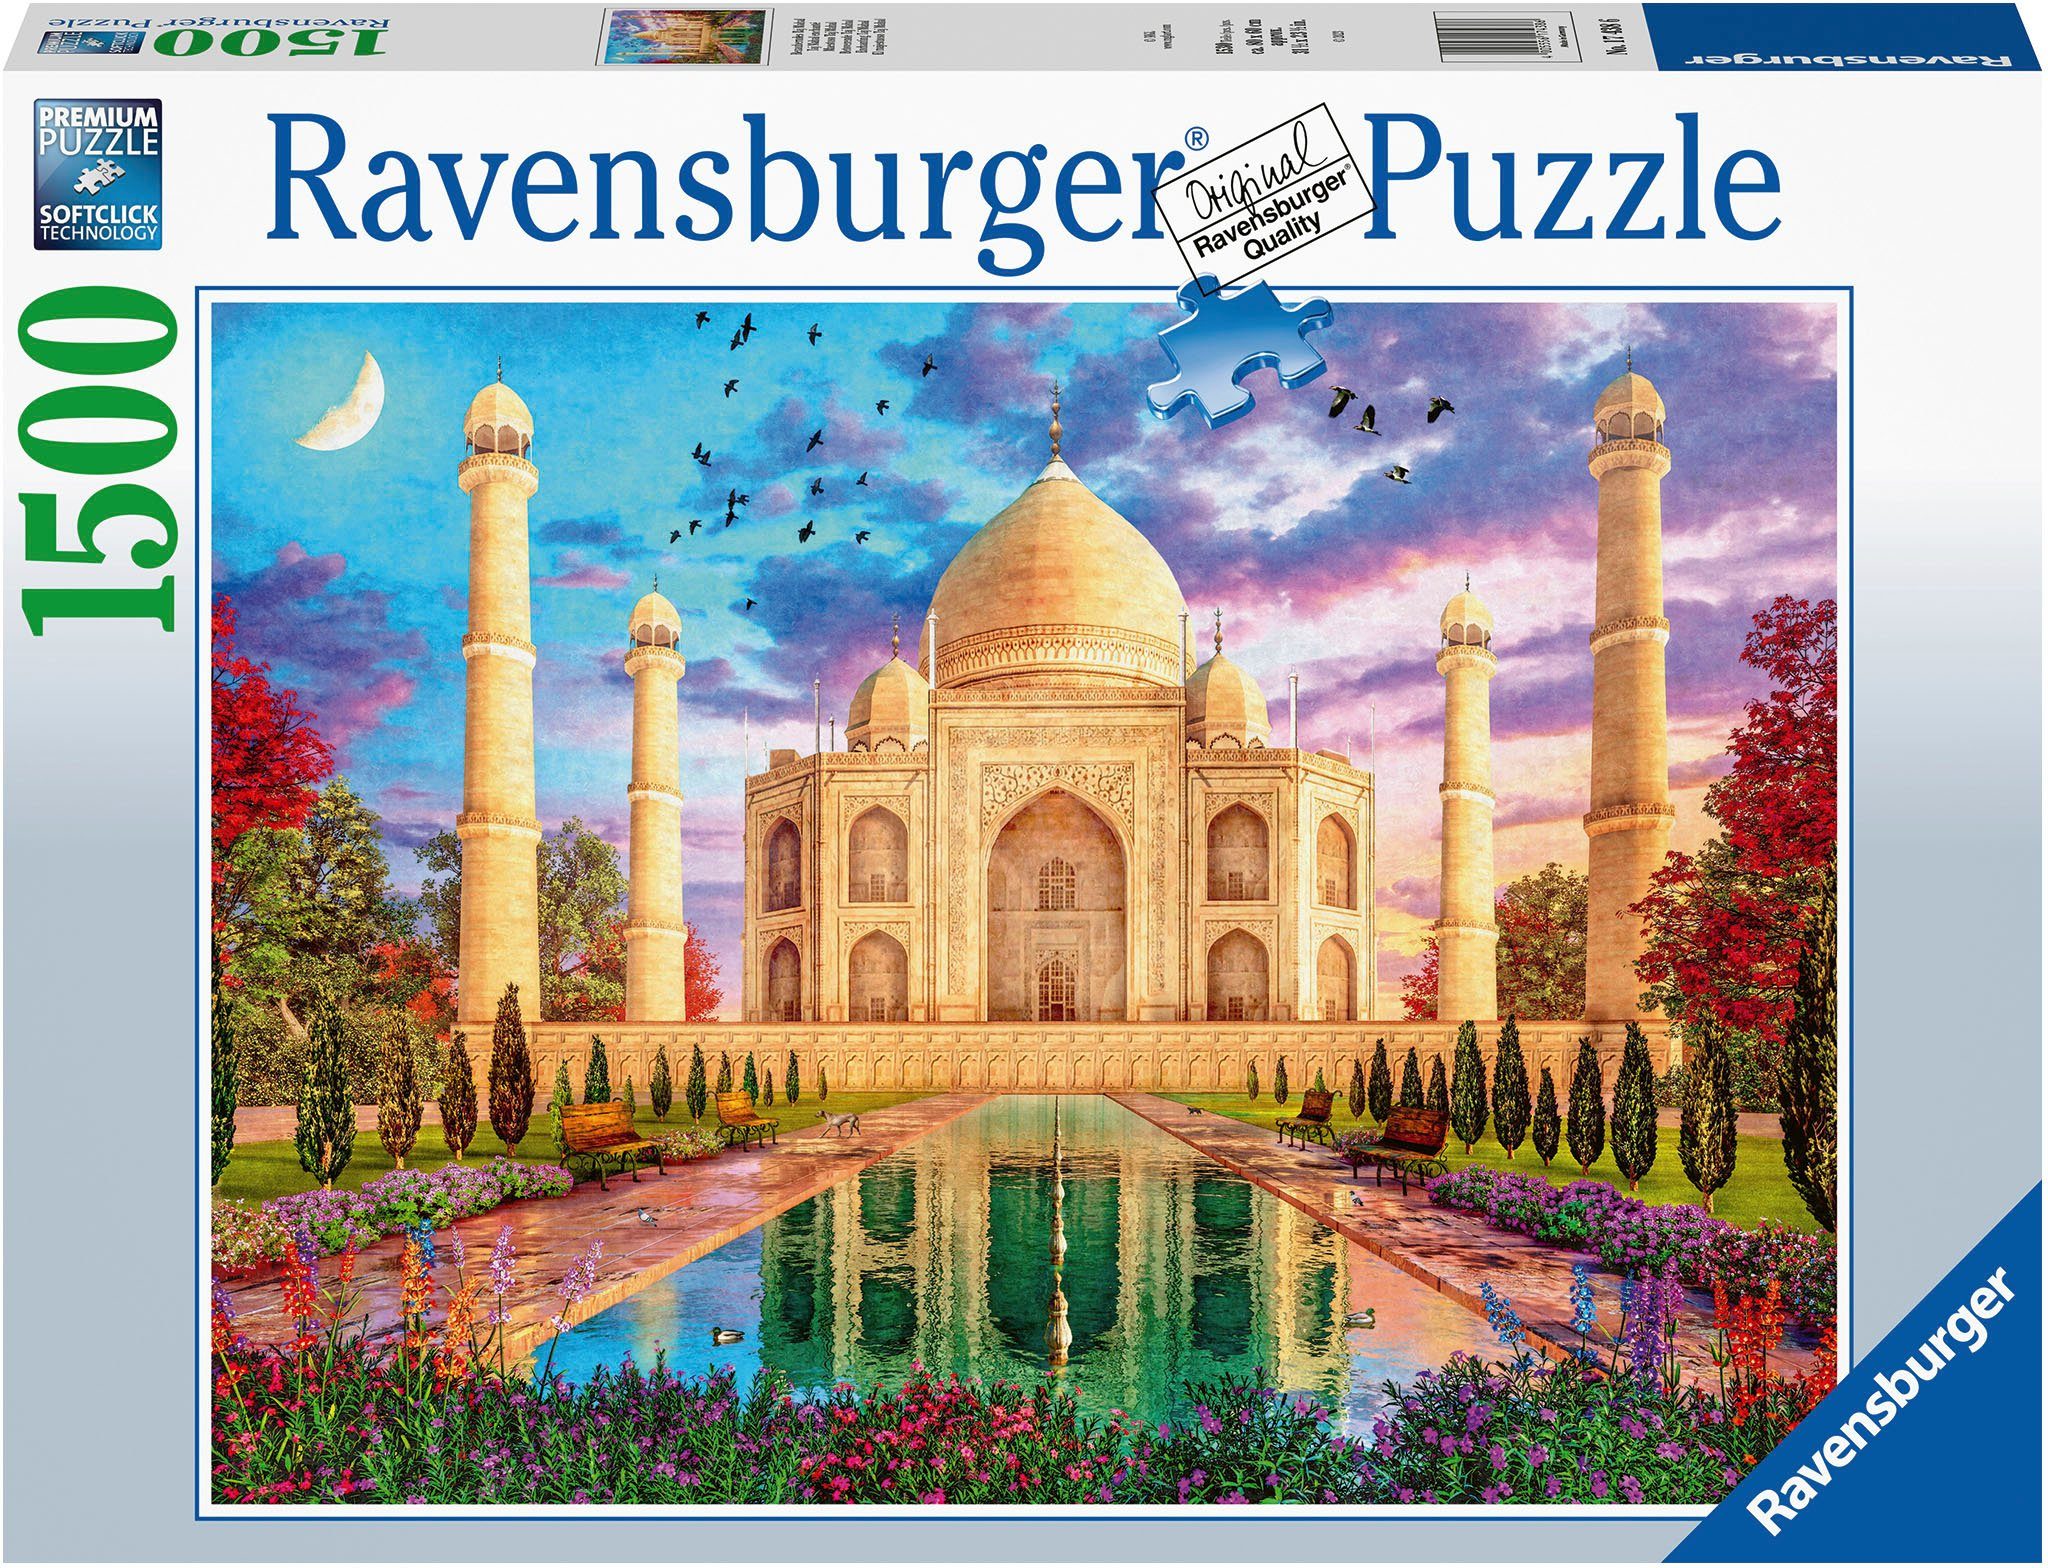 Ravensburger Puzzle Bezauberndes Taj Mahal, 1500 Puzzleteile, Made in Germany; FSC®- schützt Wald - weltweit